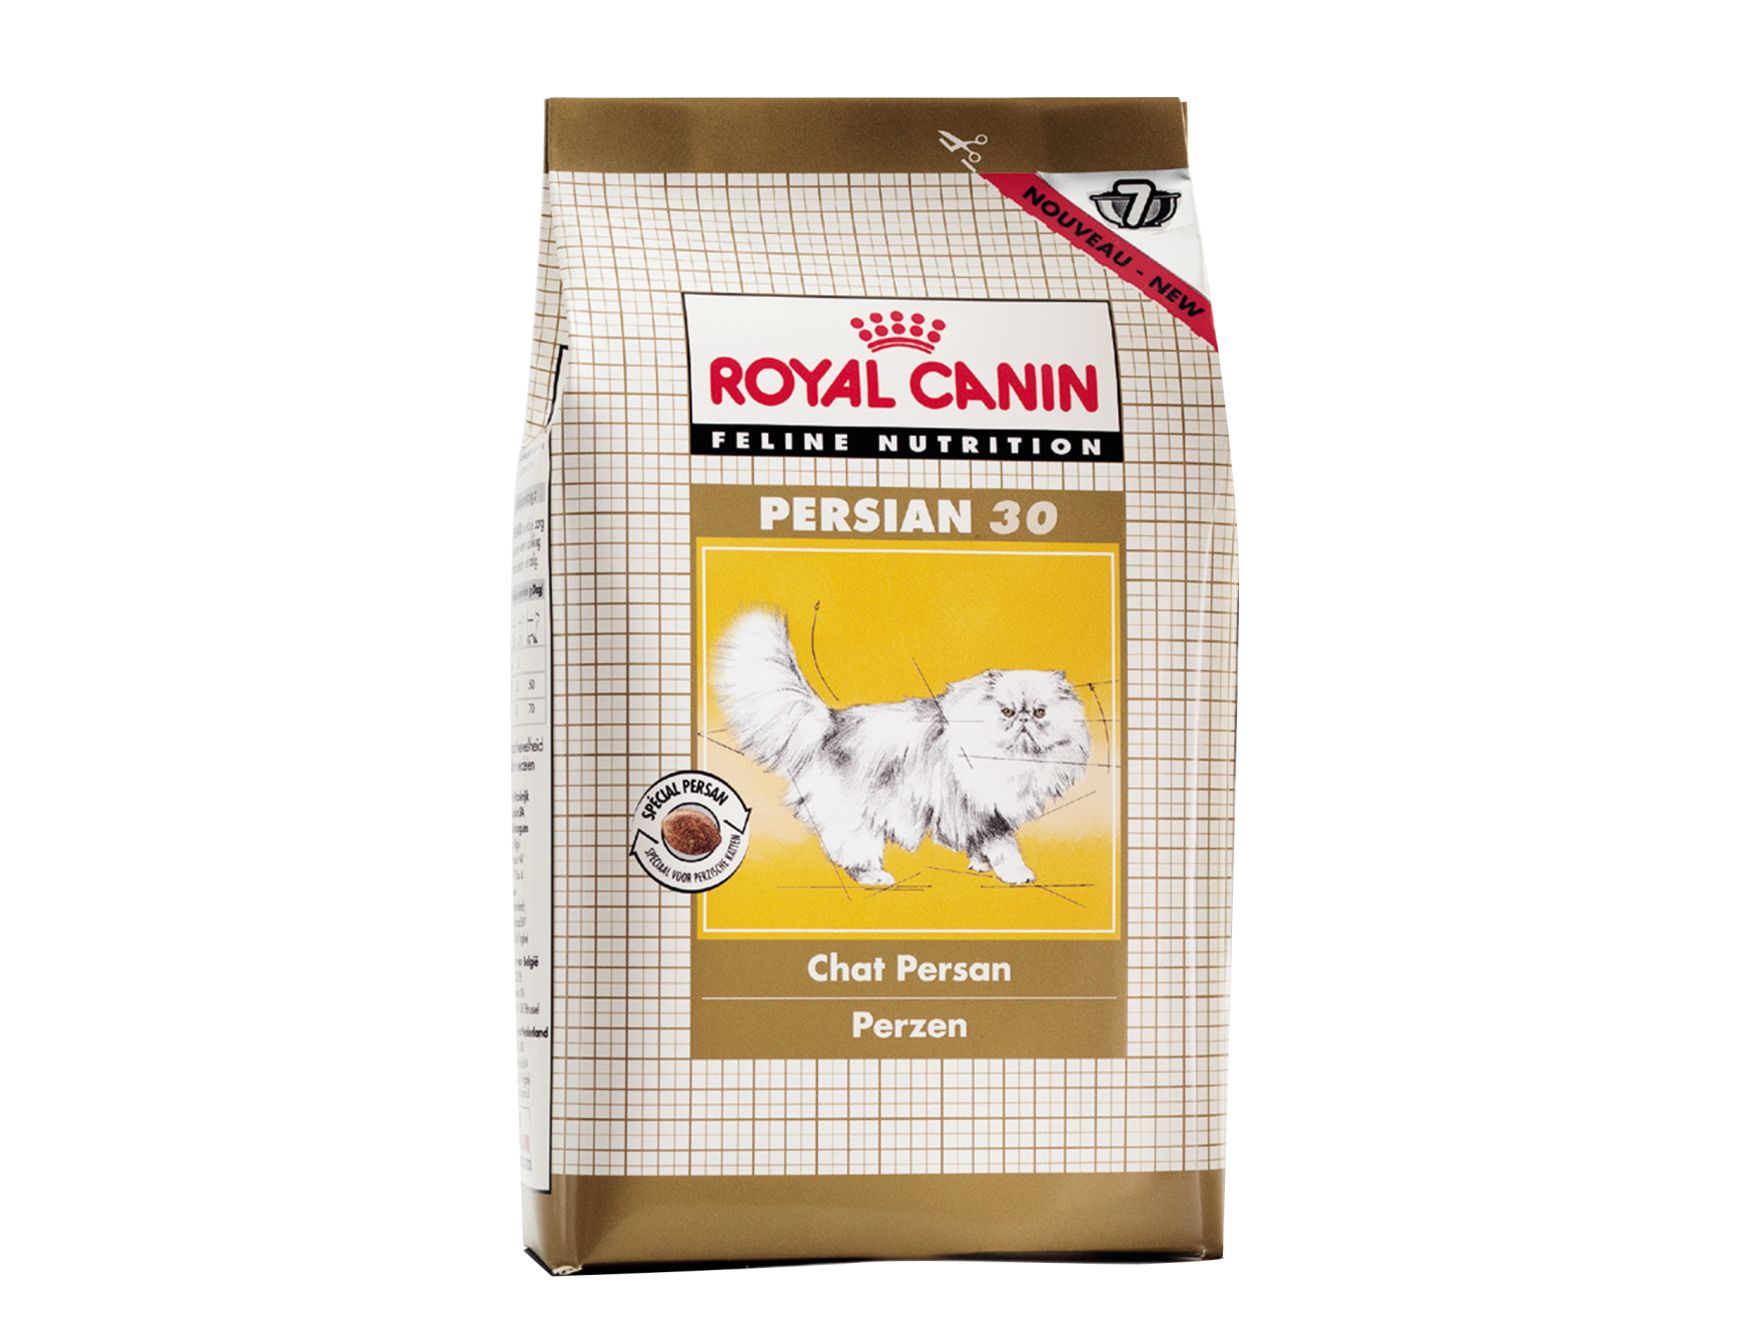 Packshot von Royal Canin Perserkatze-Produkt